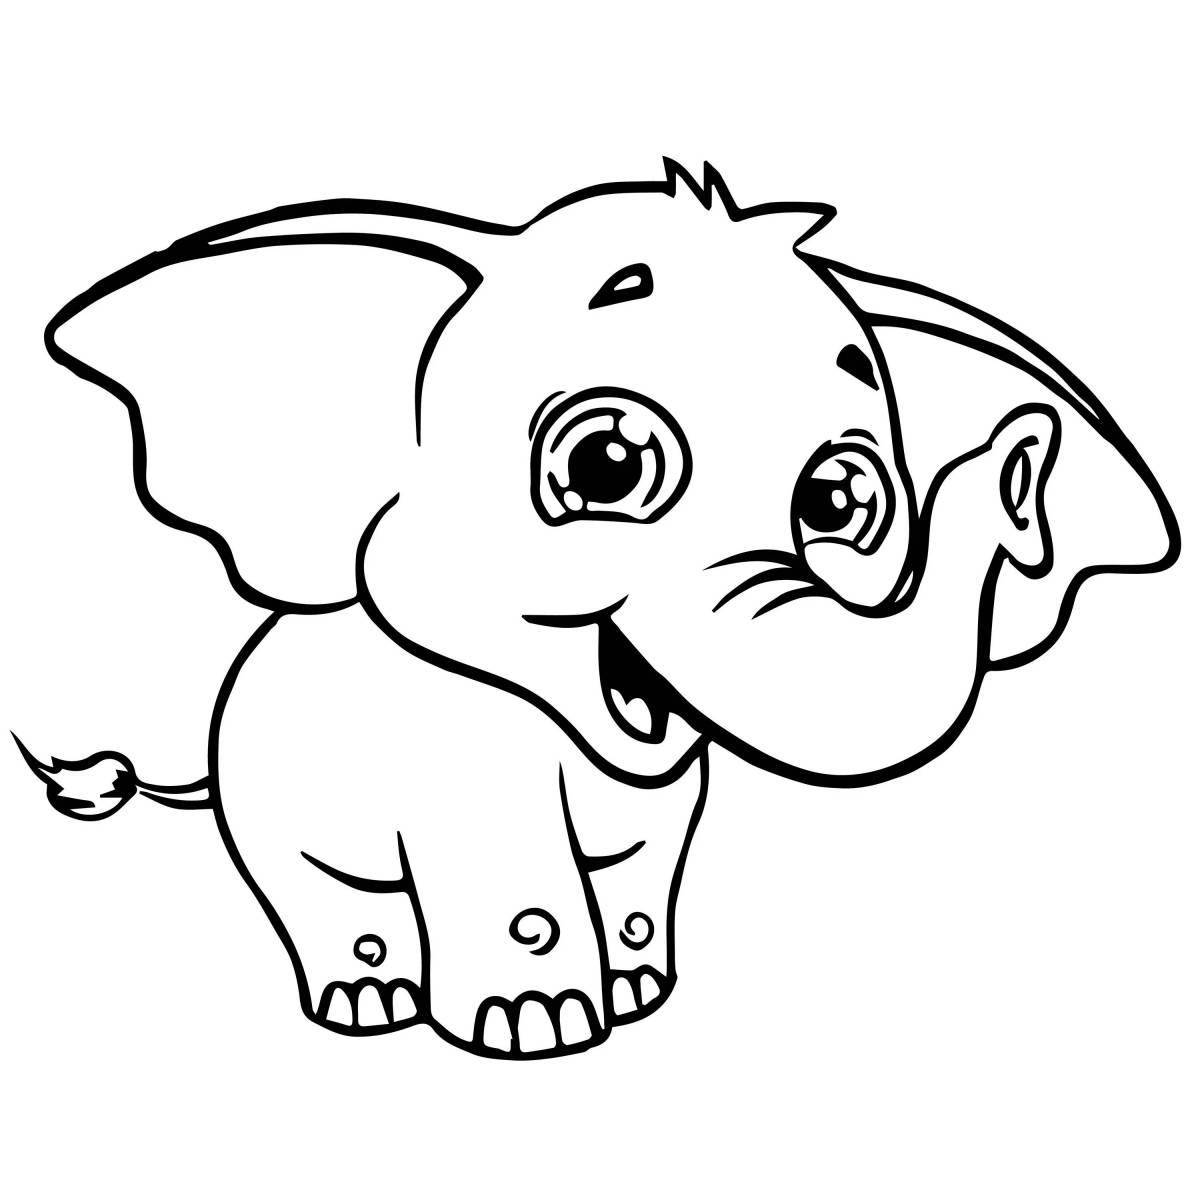 Impressive elephant coloring for kids